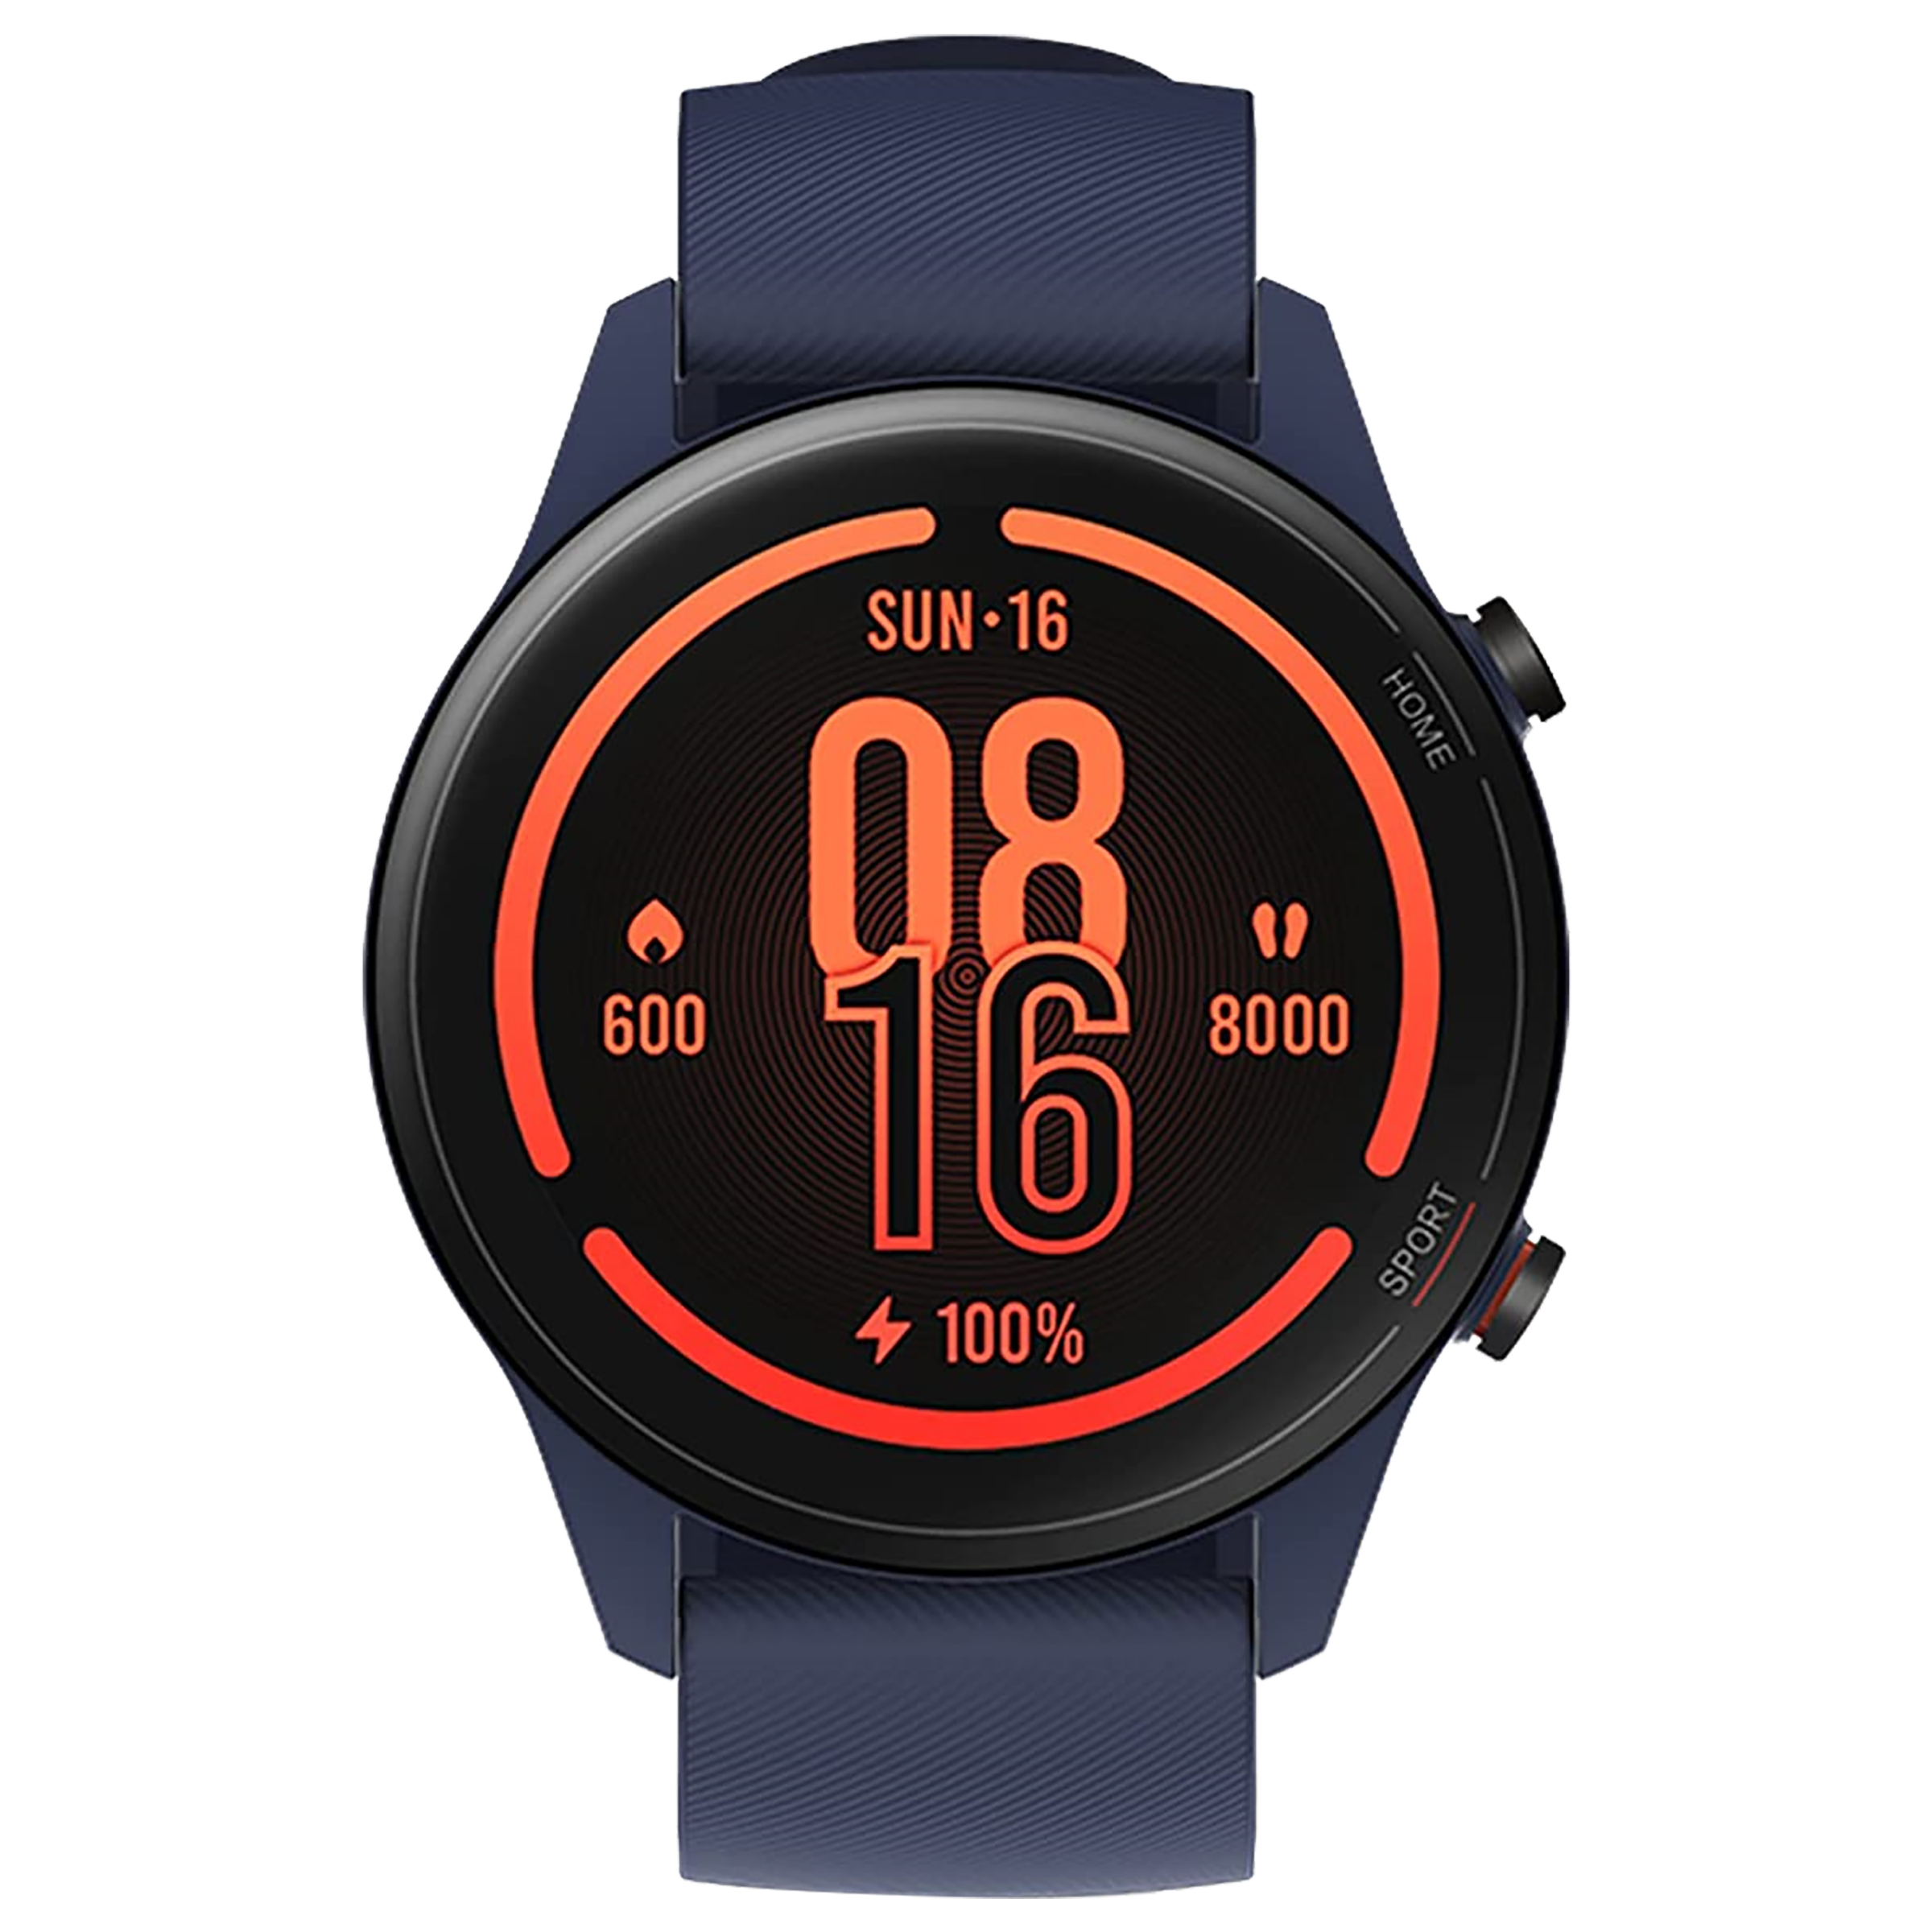 xiaomi - xiaomi Revolve Active Smart Watch (GPS, 35.33mm) (Alexa Built-In, BHR4585IN, Black/Blue, Sport Band)